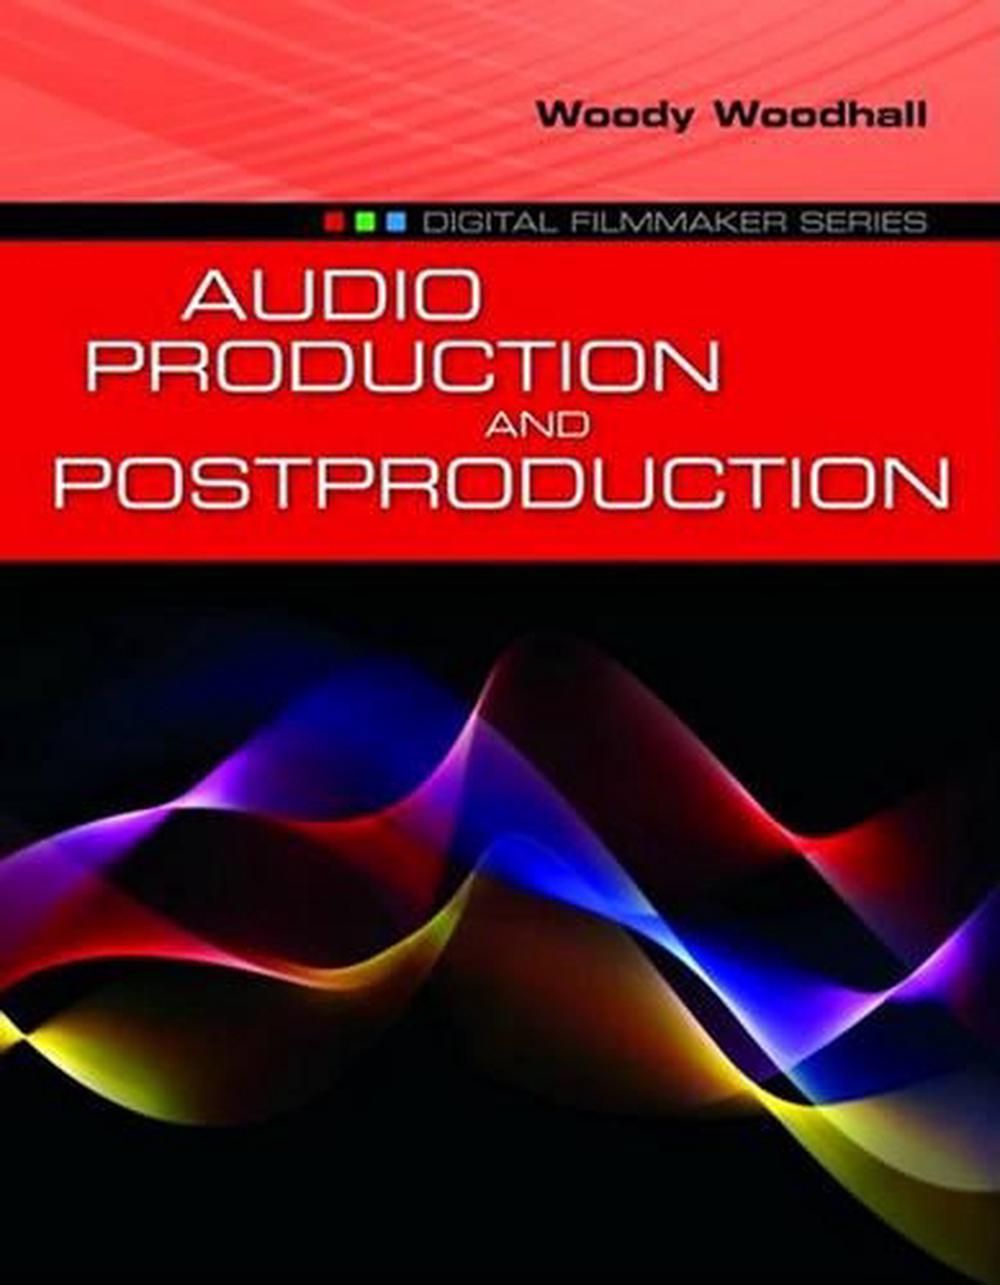 audio book production